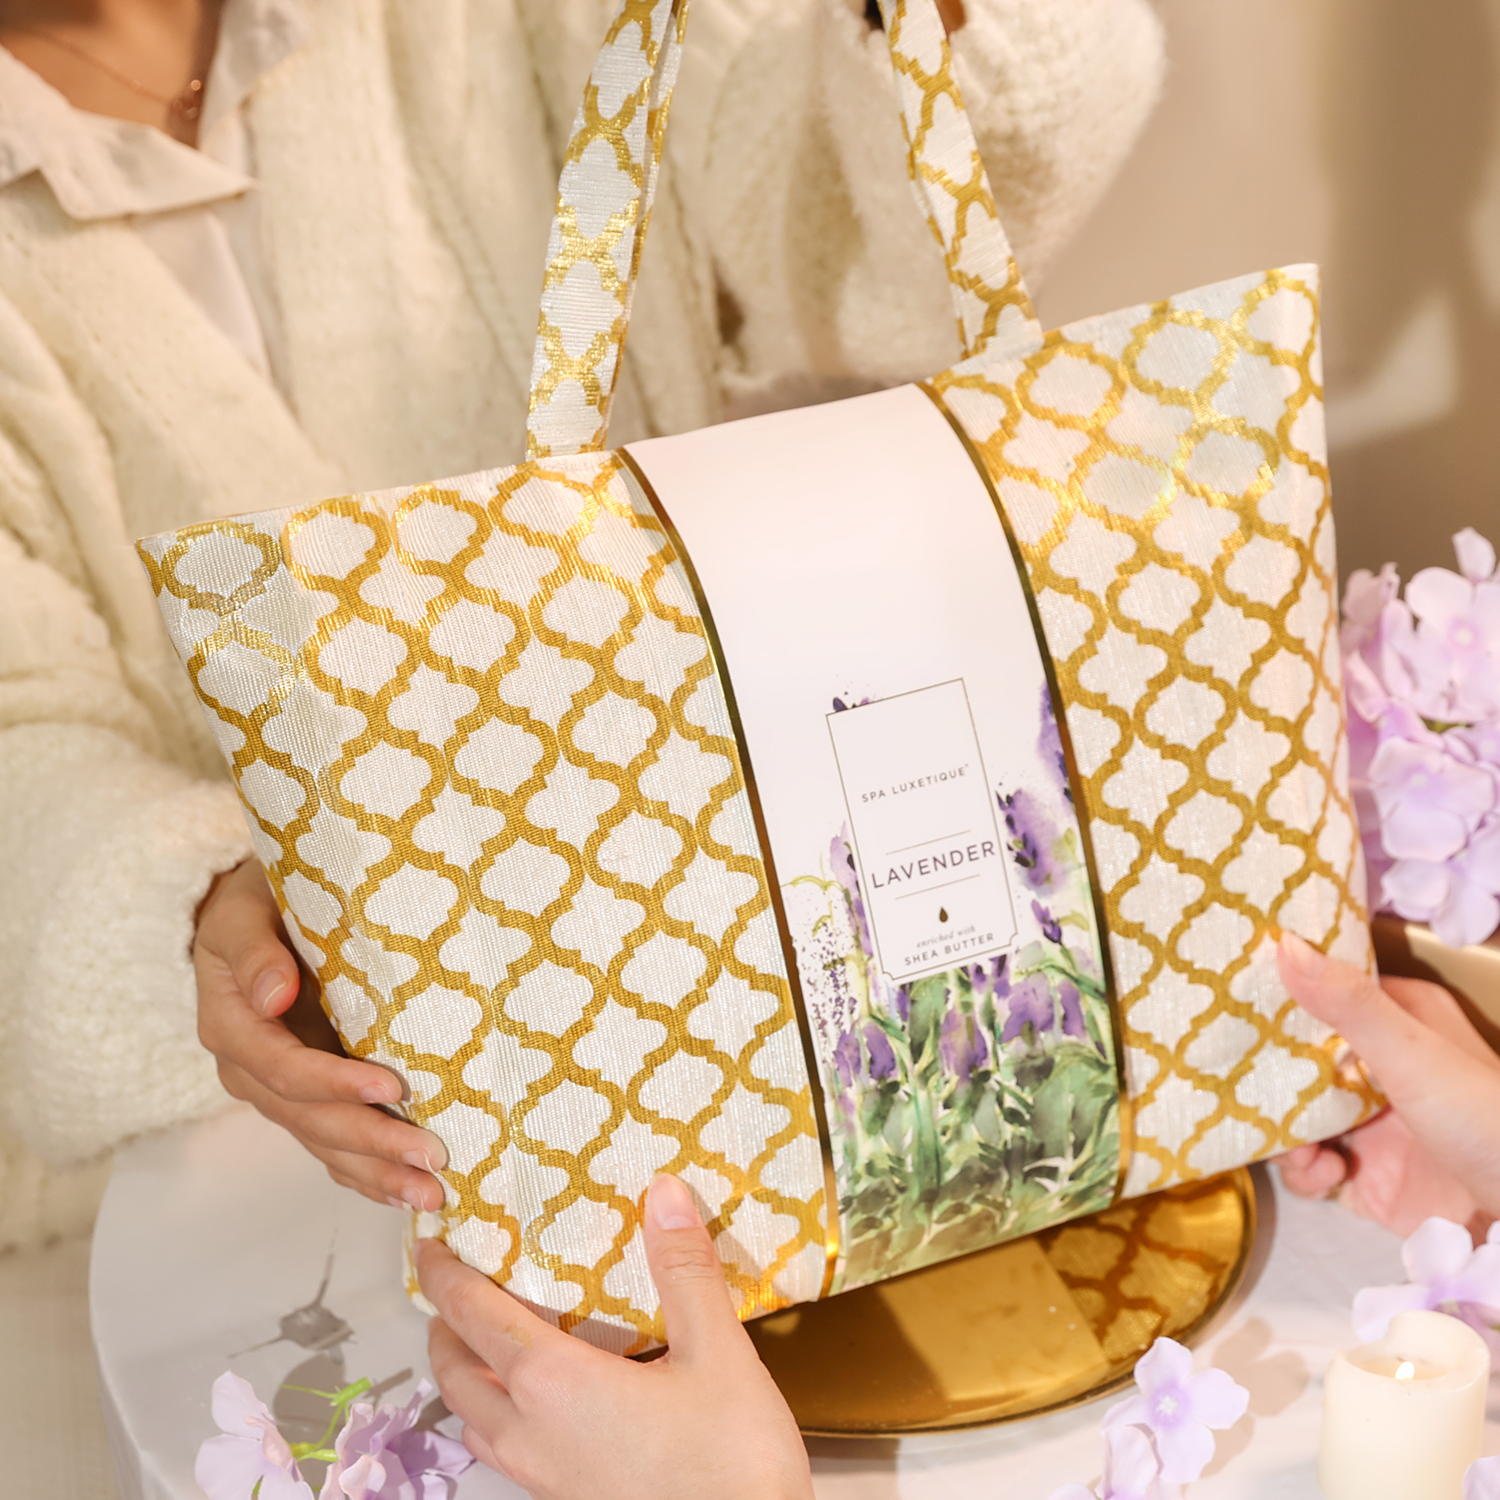 Spa Luxetique Gift Sets Lavender Fashion Bath Set Tote